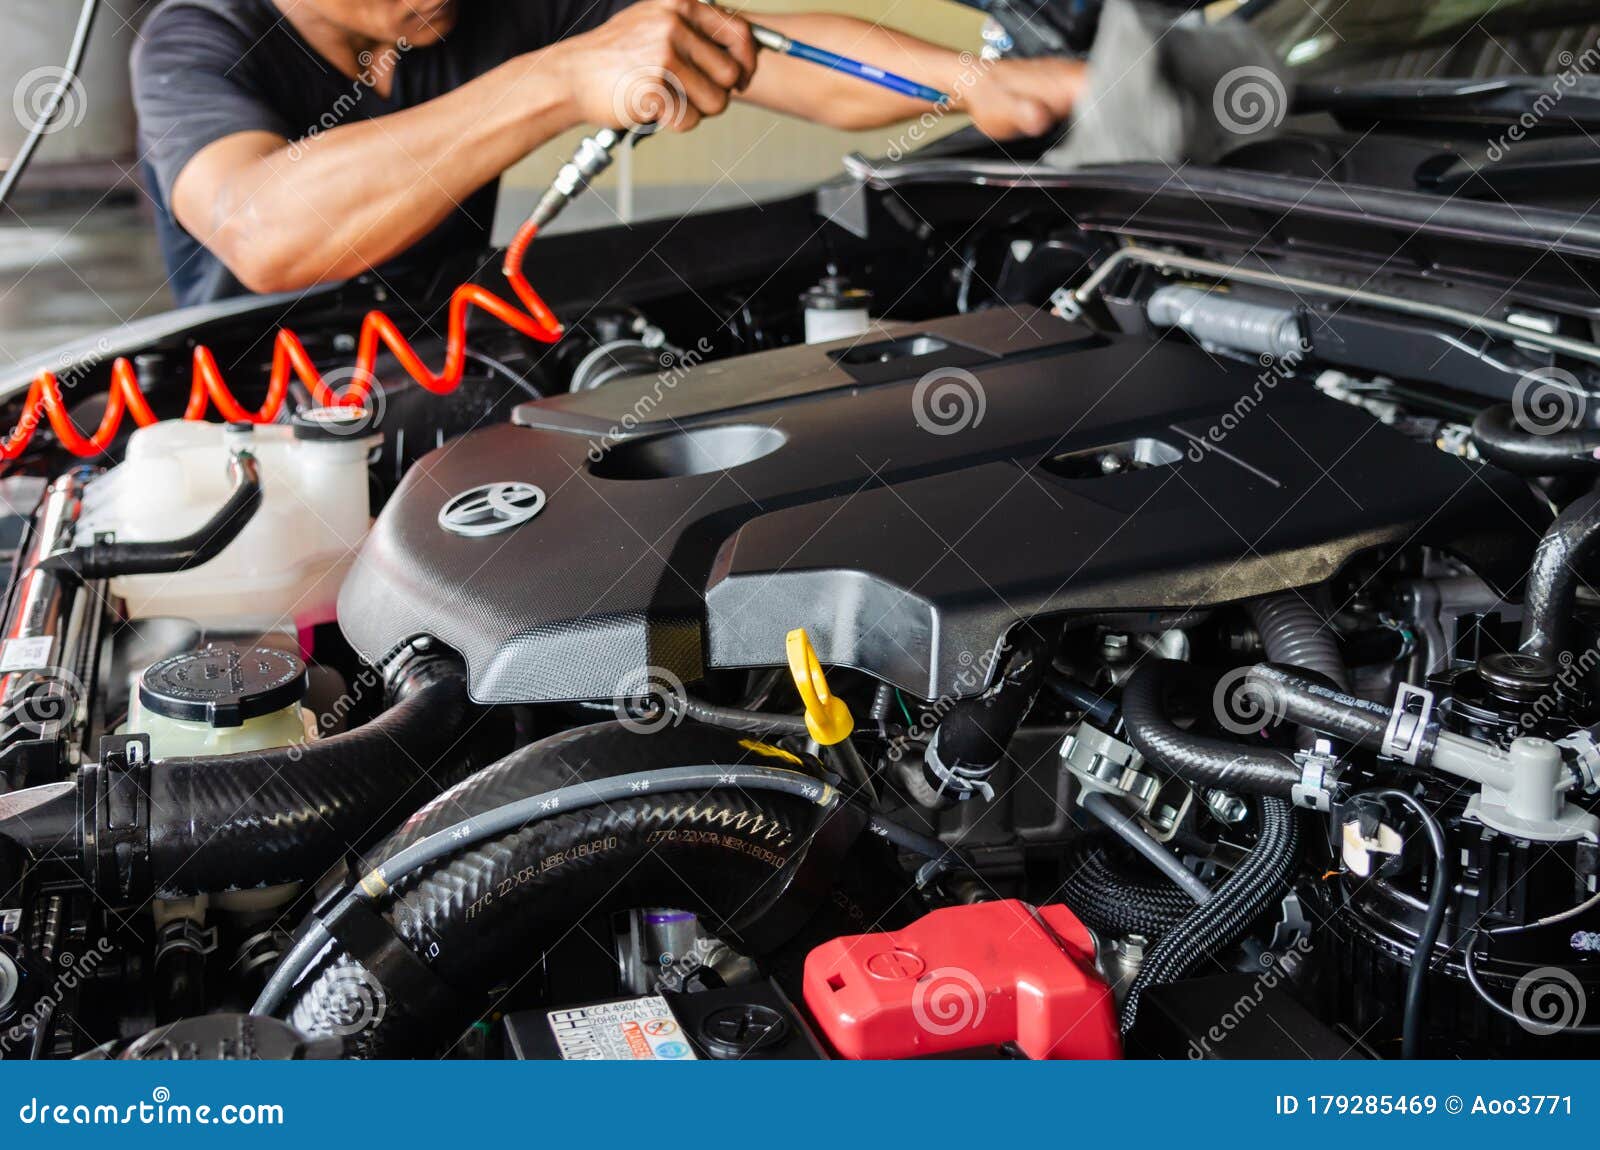 Car engine cleaner stock image. Image of machine, metal - 179285469